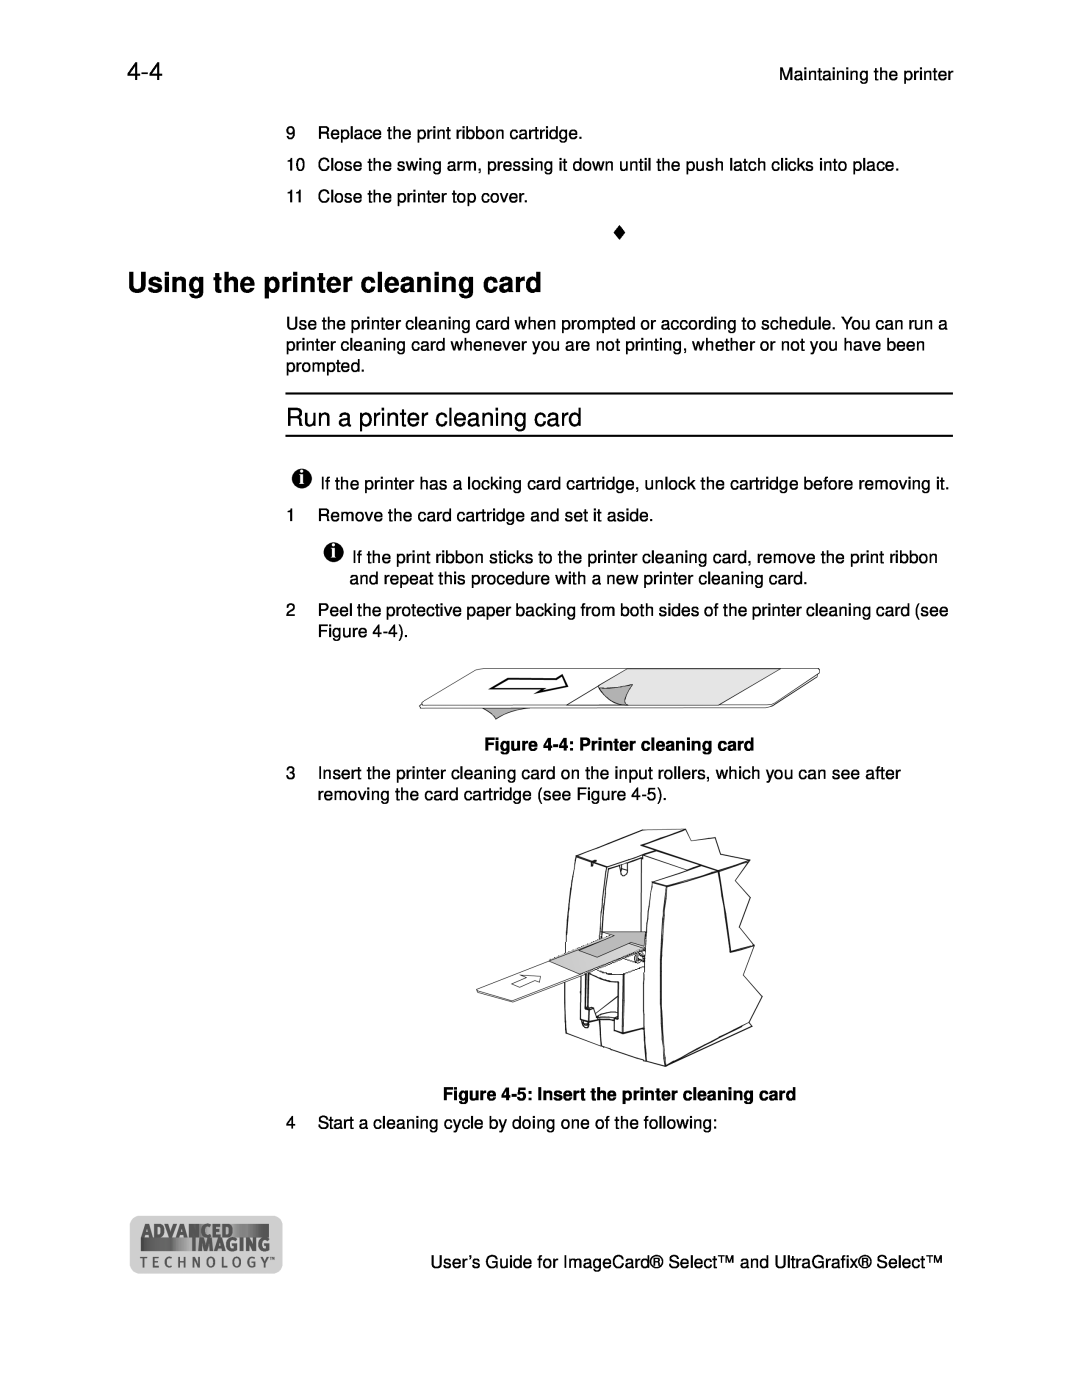 Datacard Group ImageCard SelectTM and UltraGrafix SelectTM Printers manual Using the printer cleaning card 